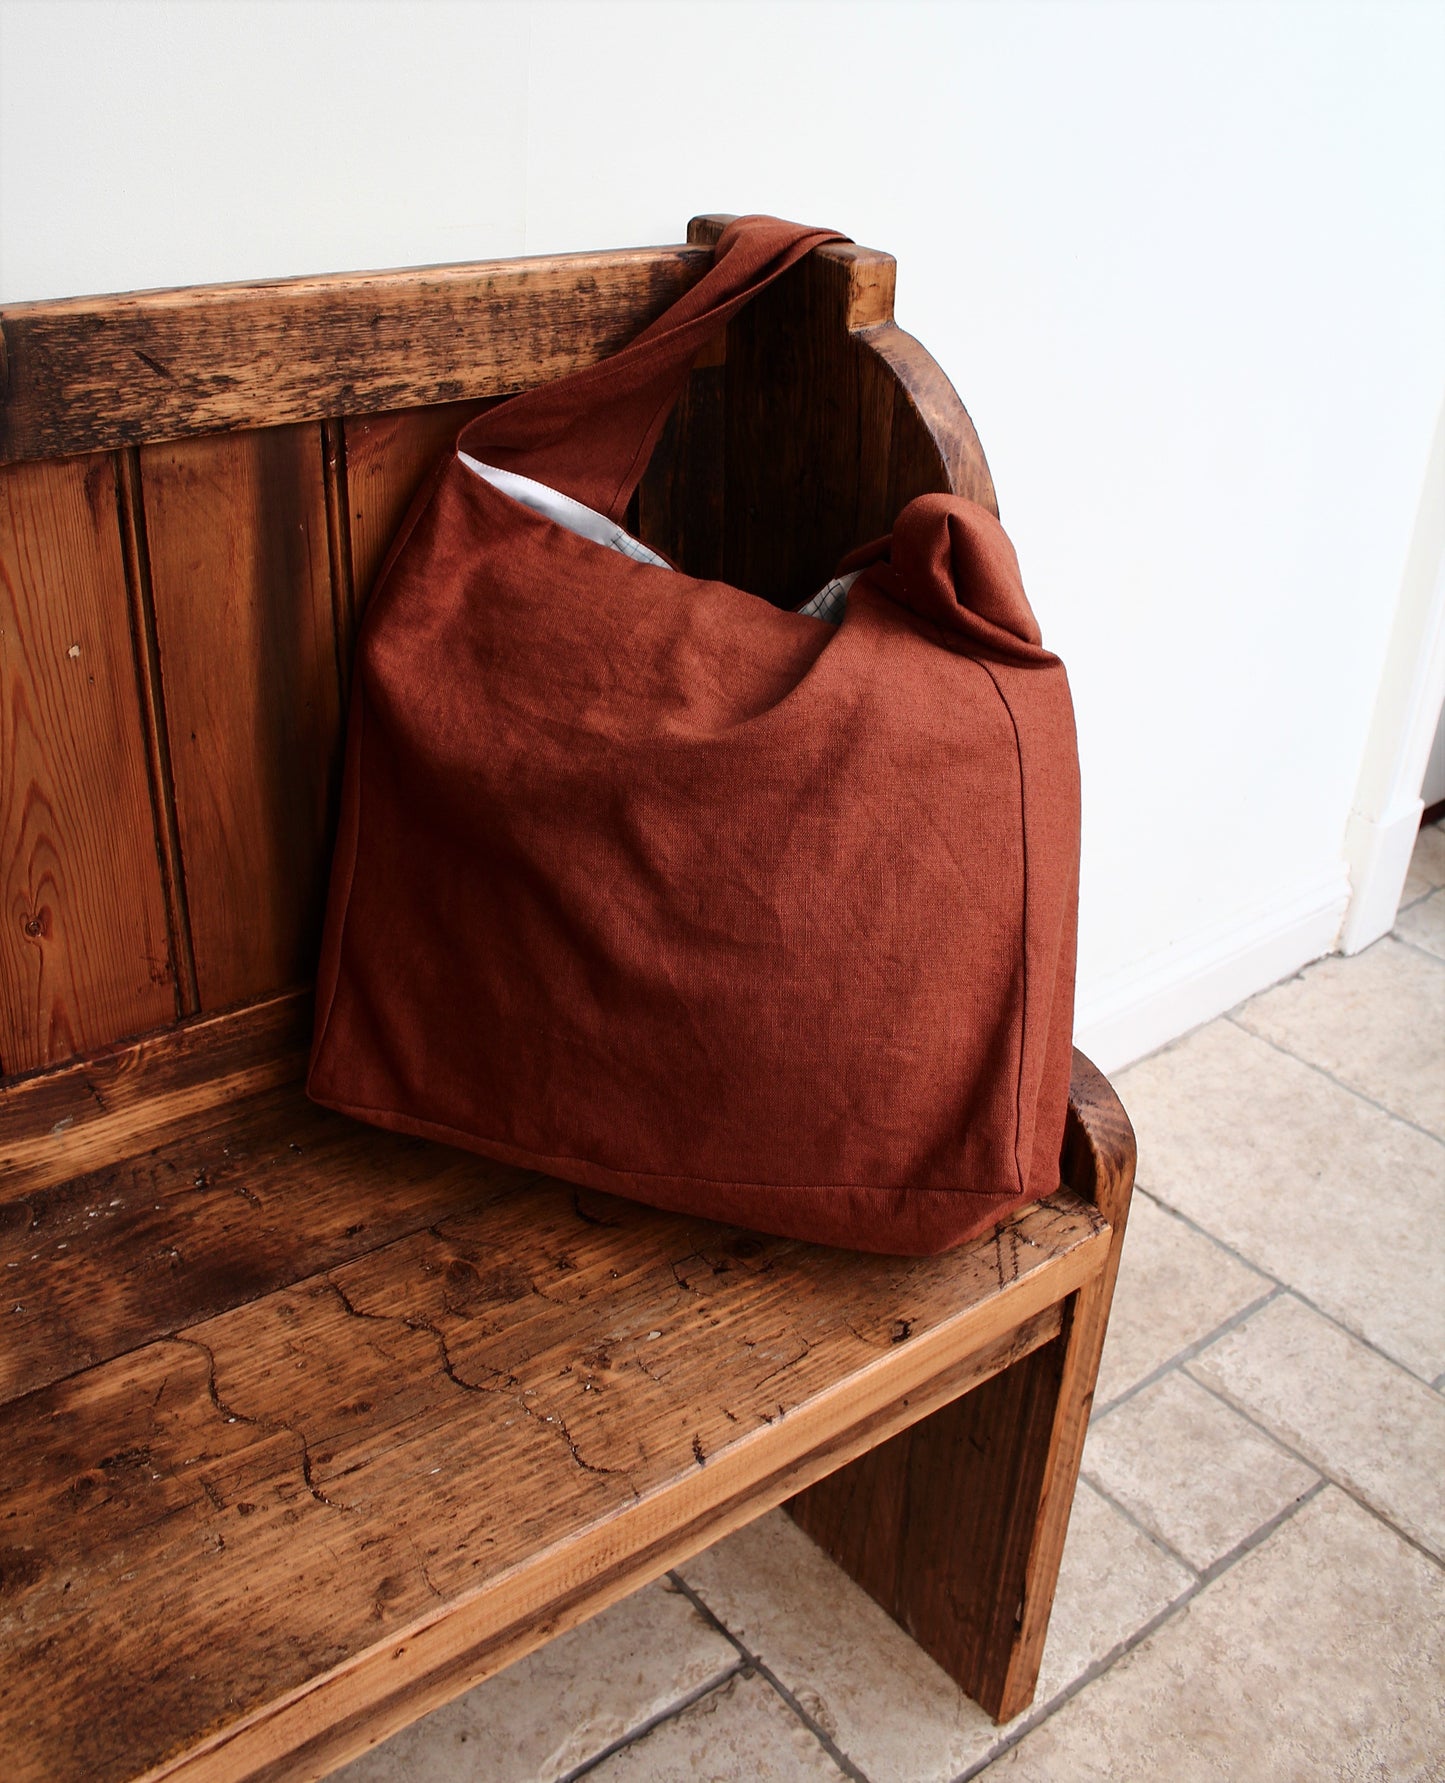 MAURIZIA'S linen crossbody bag with a zip closure